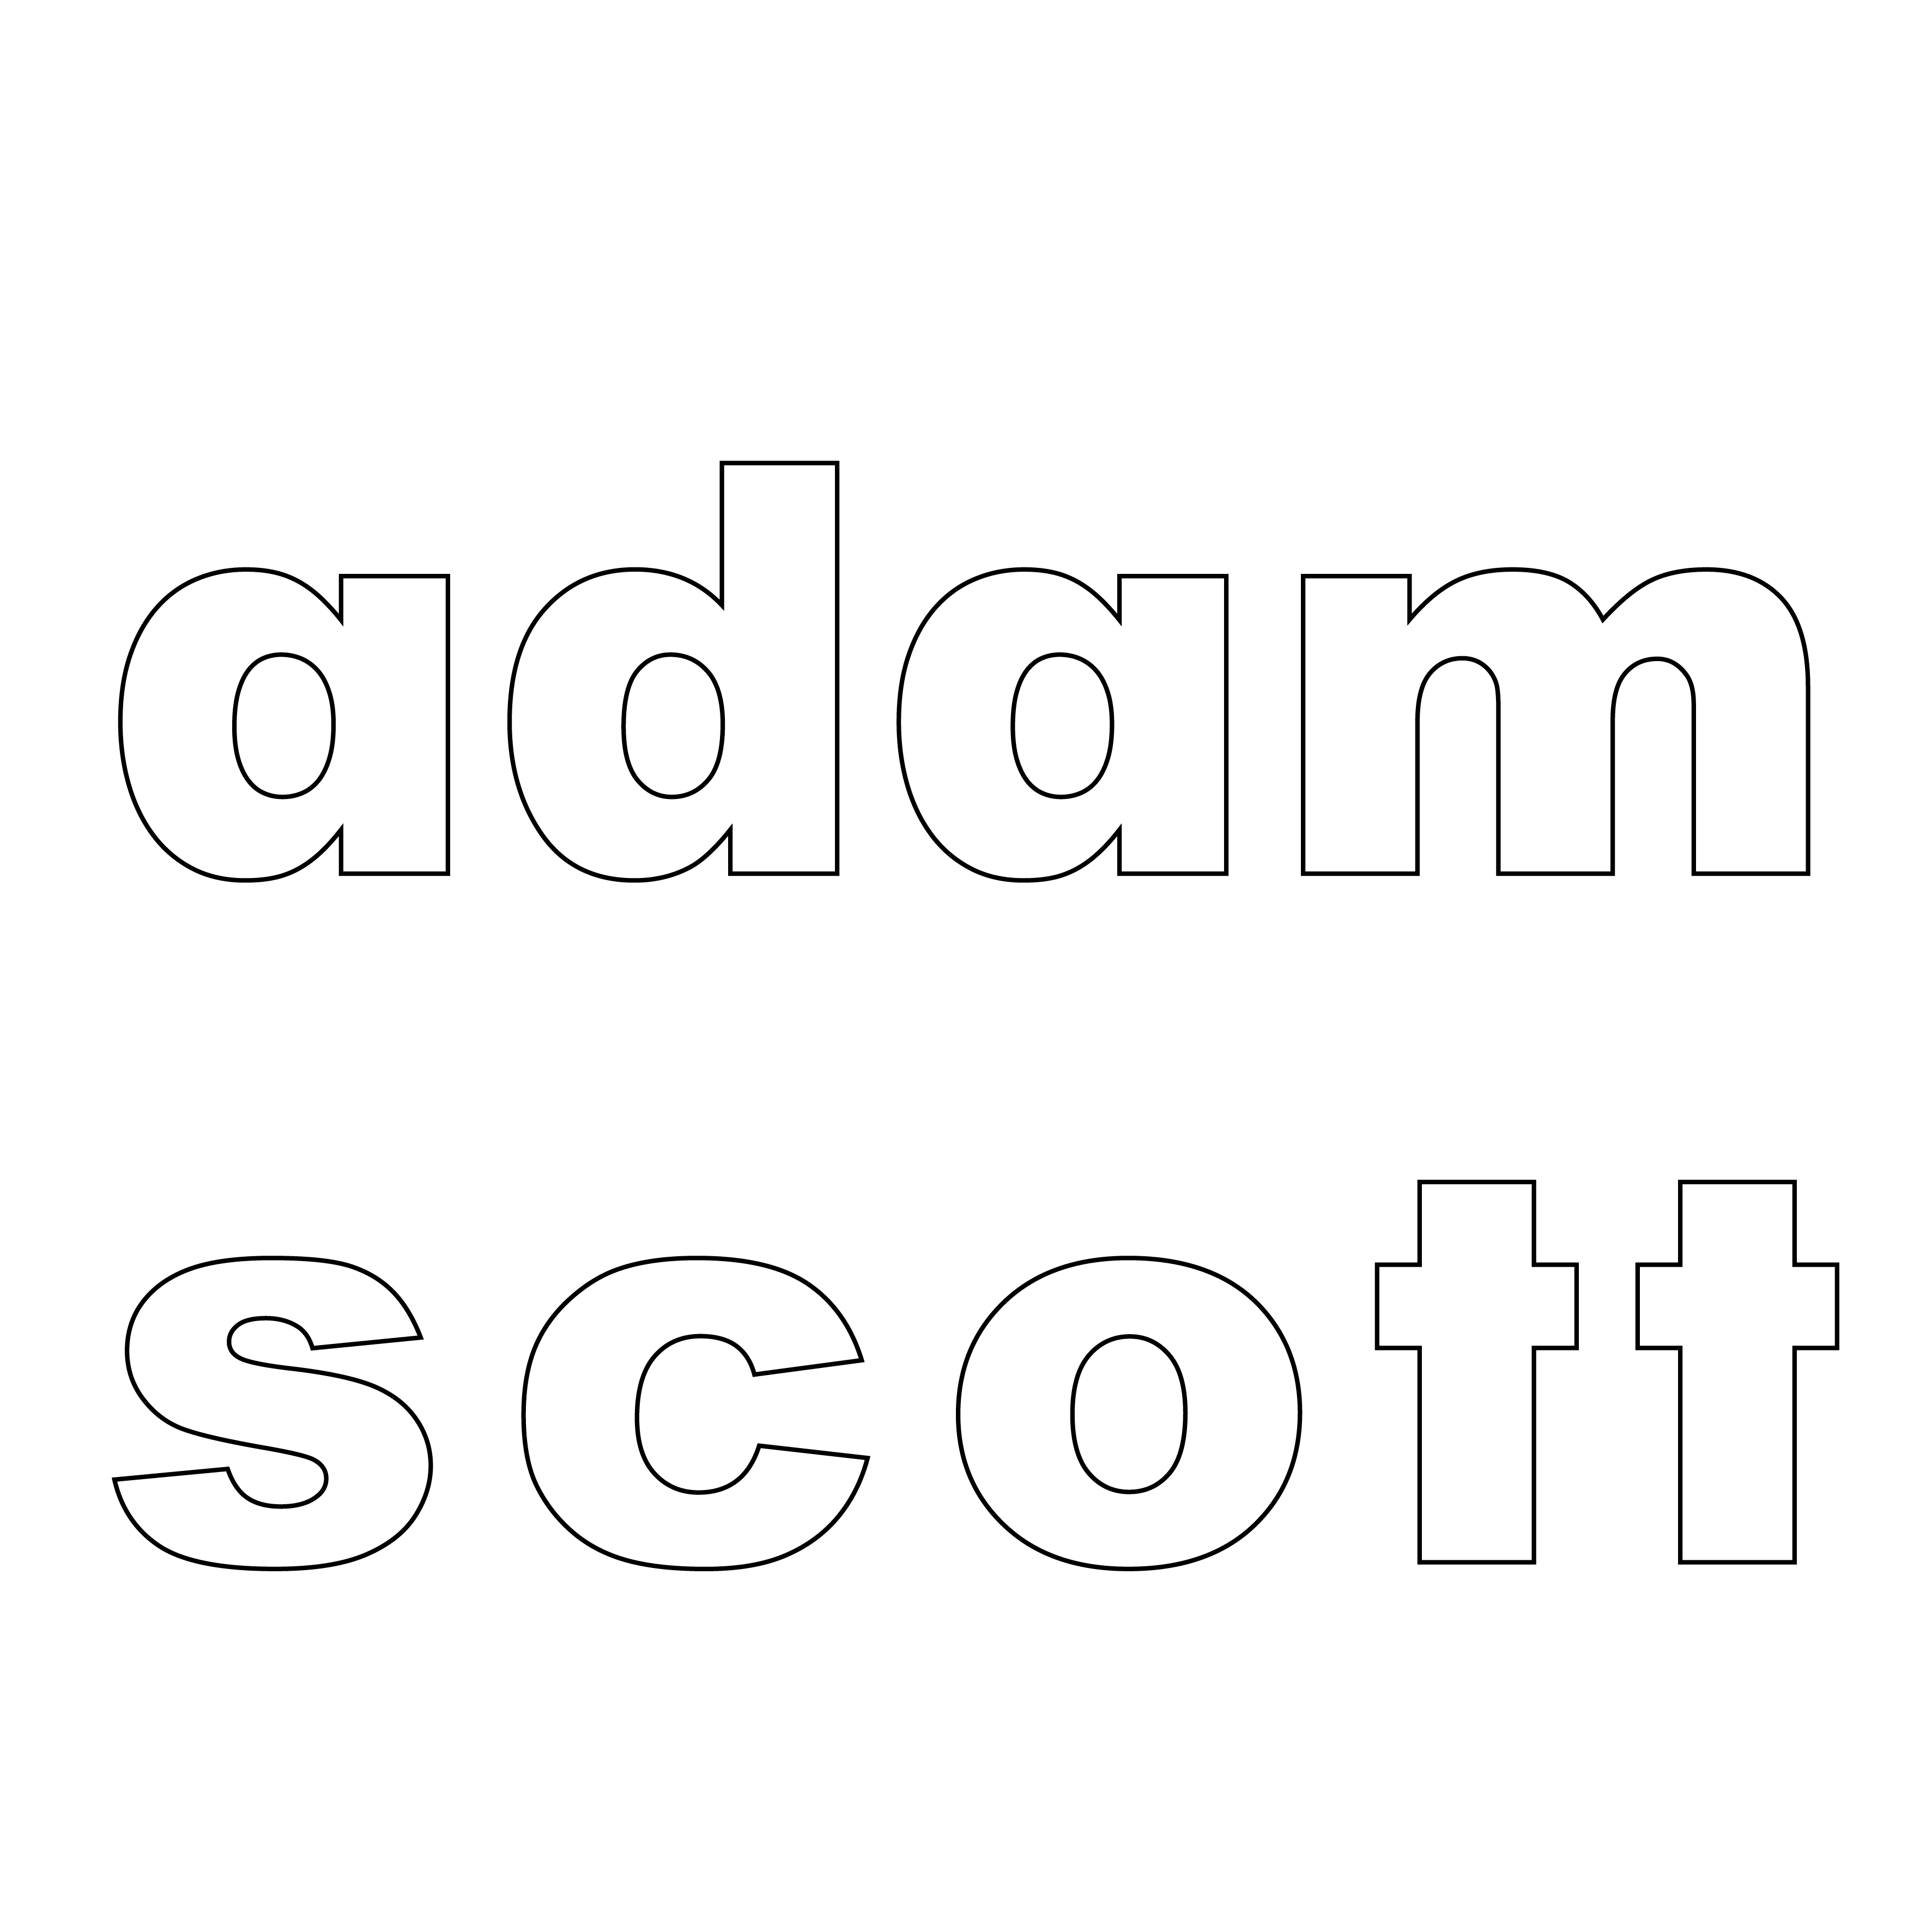 Adam Scott